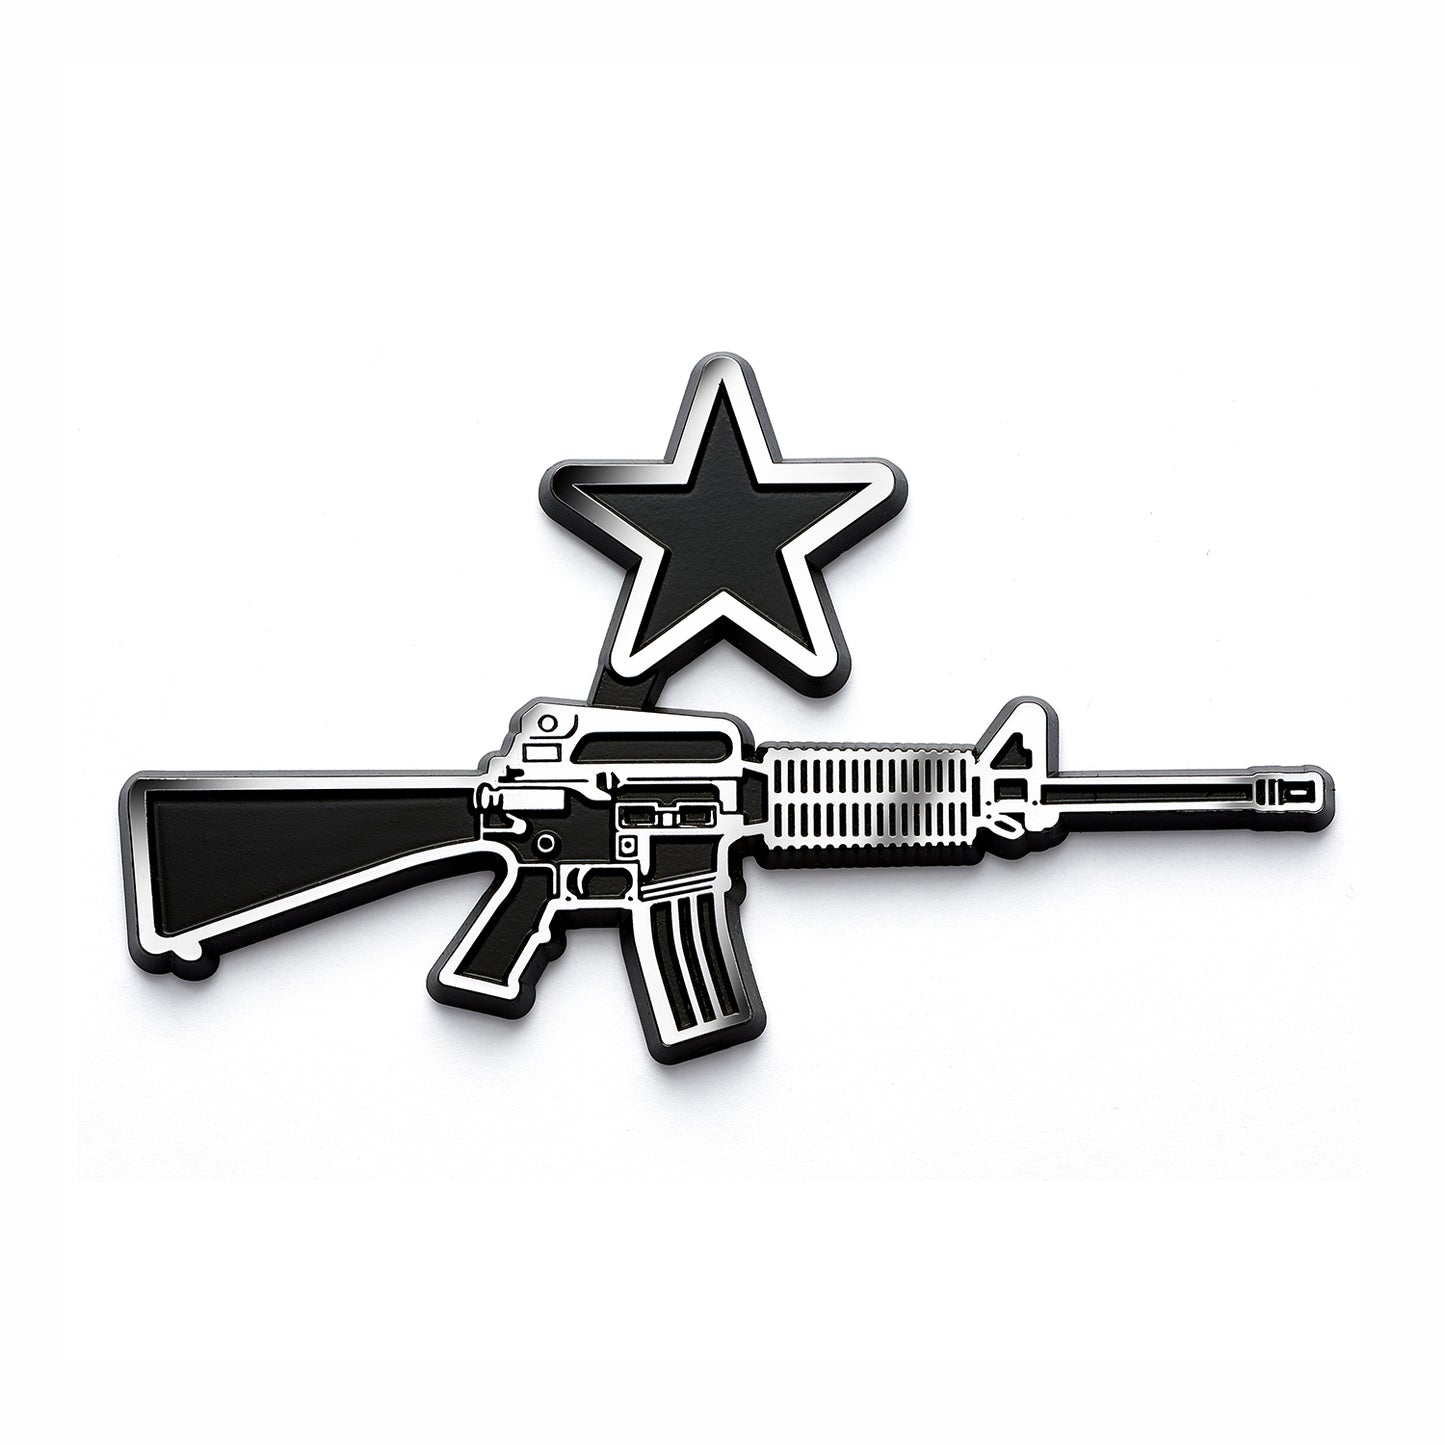 AR-15 Style "Come and Take It" Car Emblem (Chrome/Black)